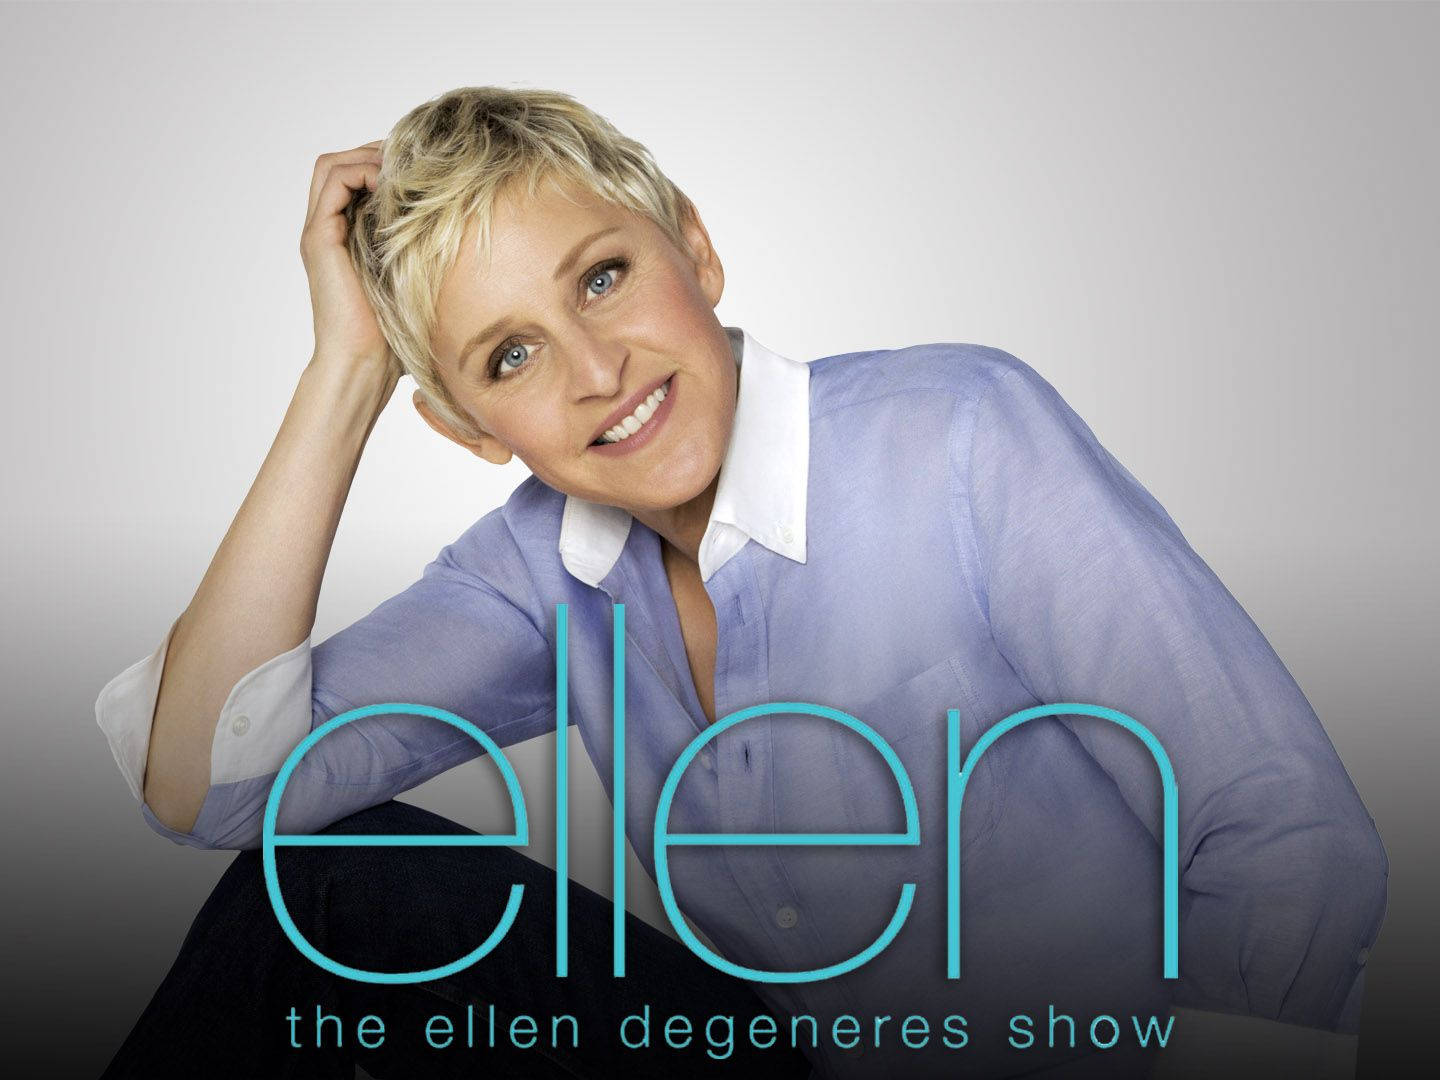 The Ellen Show Poster Background